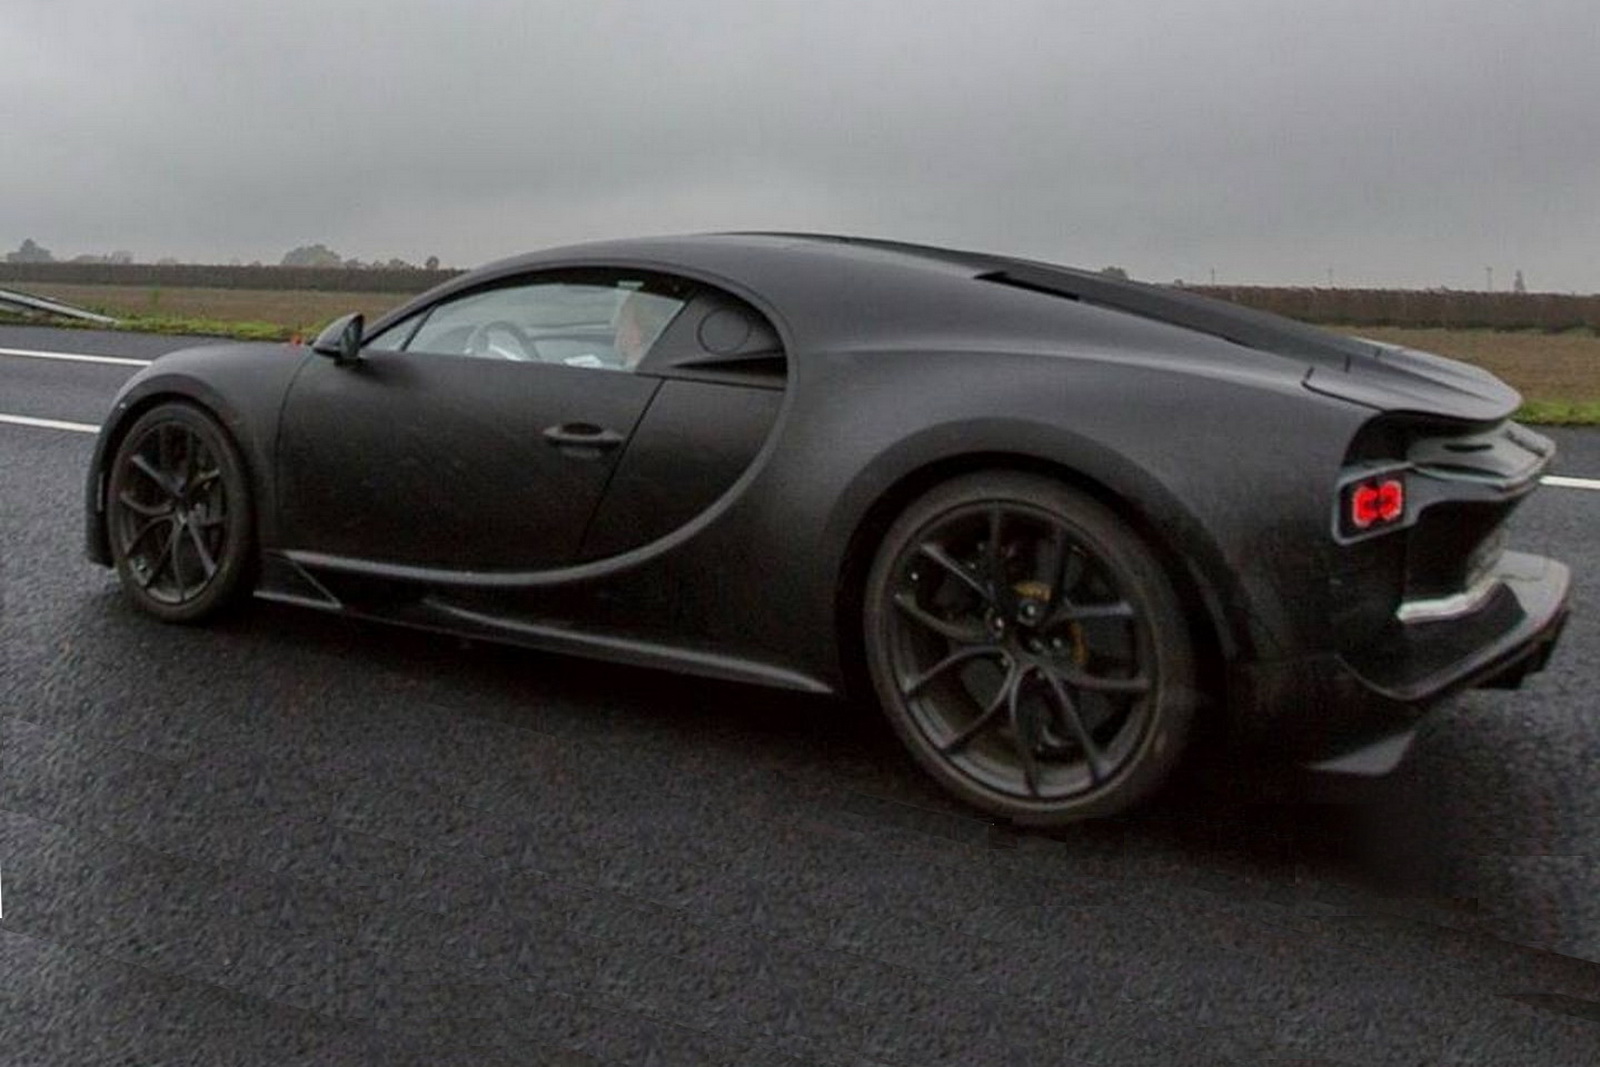 http://gtspirit.com/wp-content/uploads/2015/11/BugattiChironMule-00.jpg